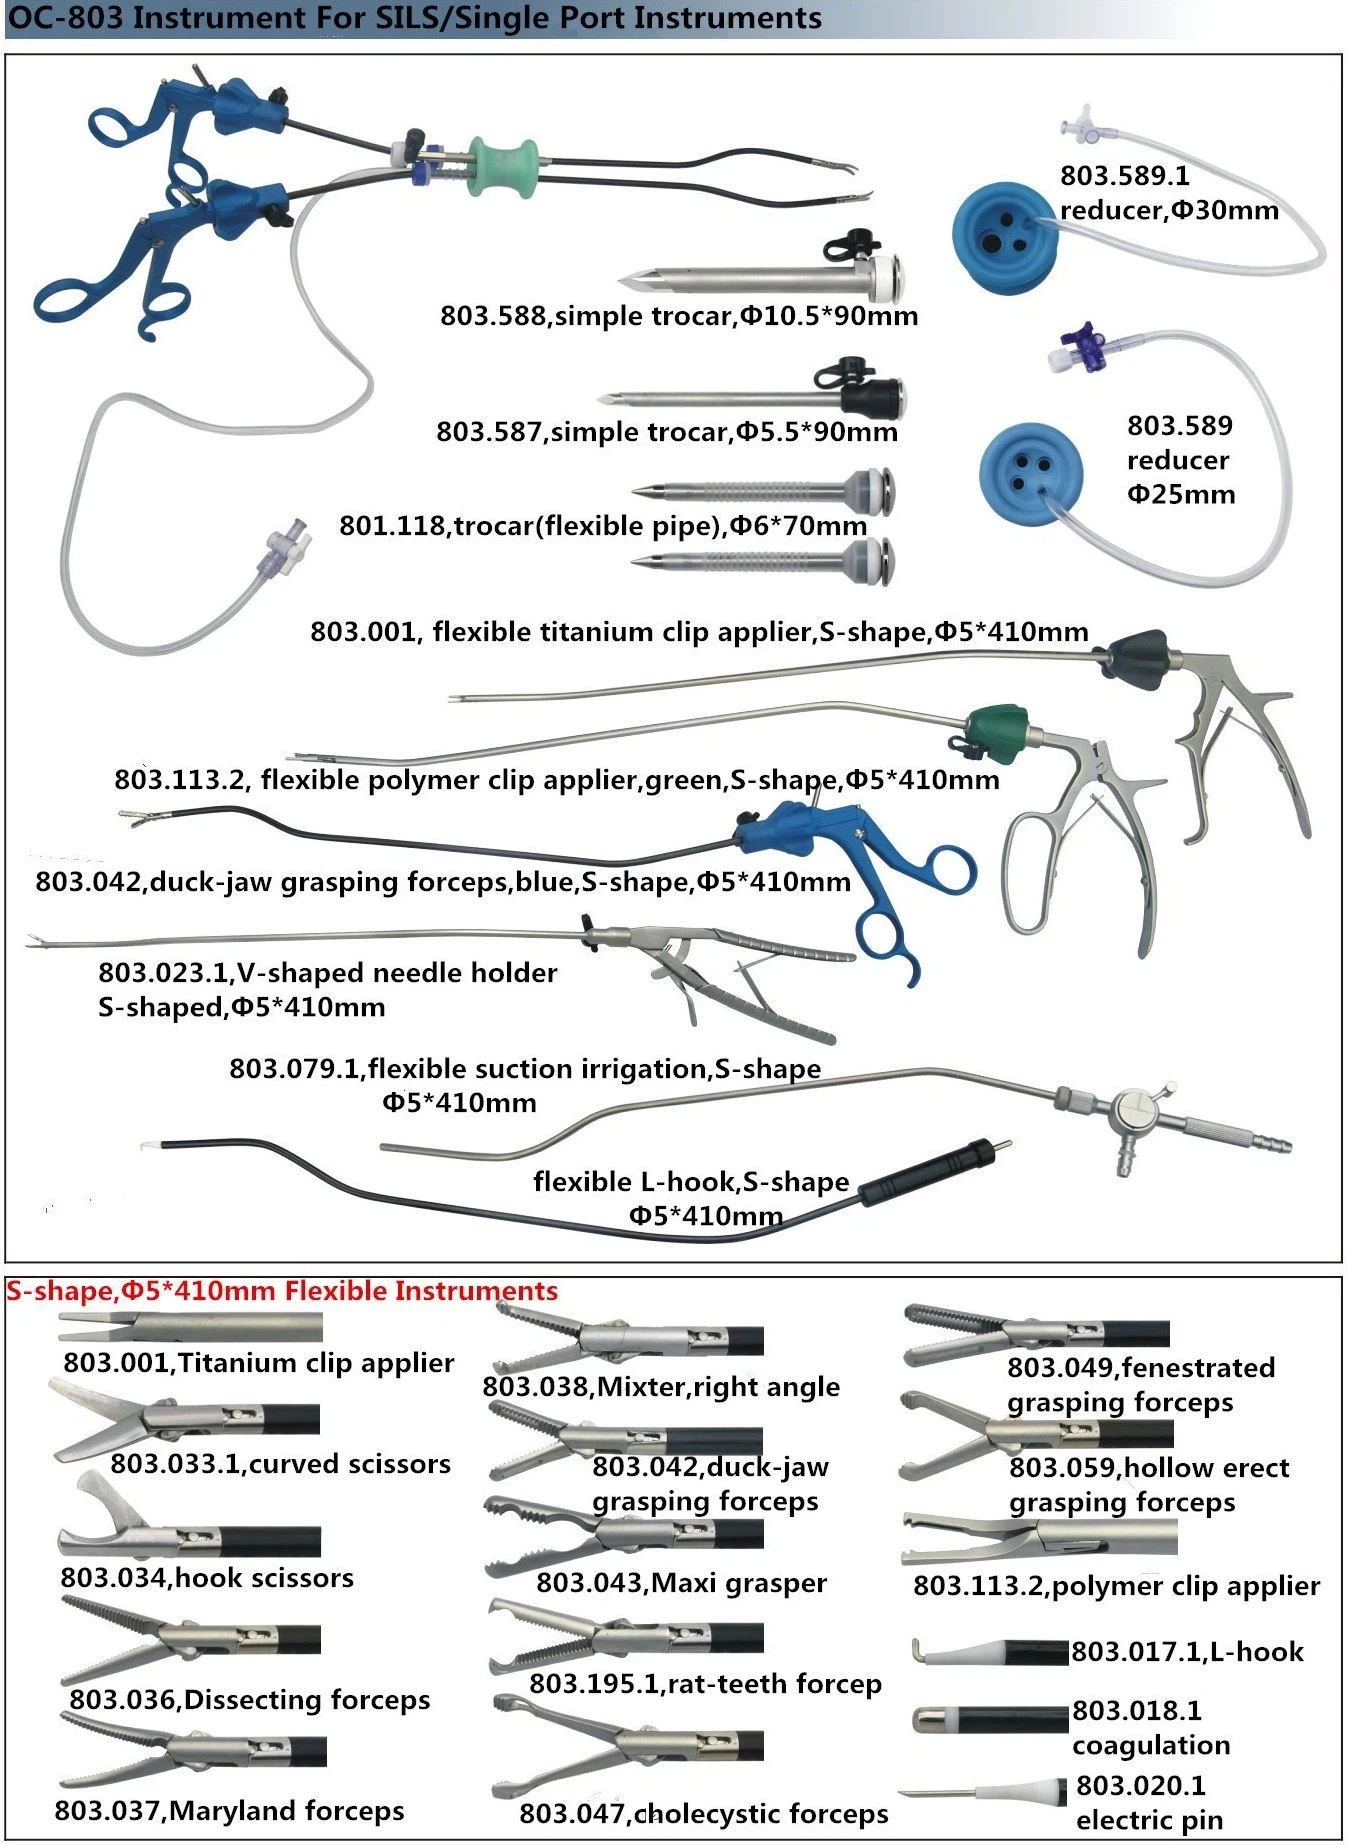 laparoscopic instruments for SILS